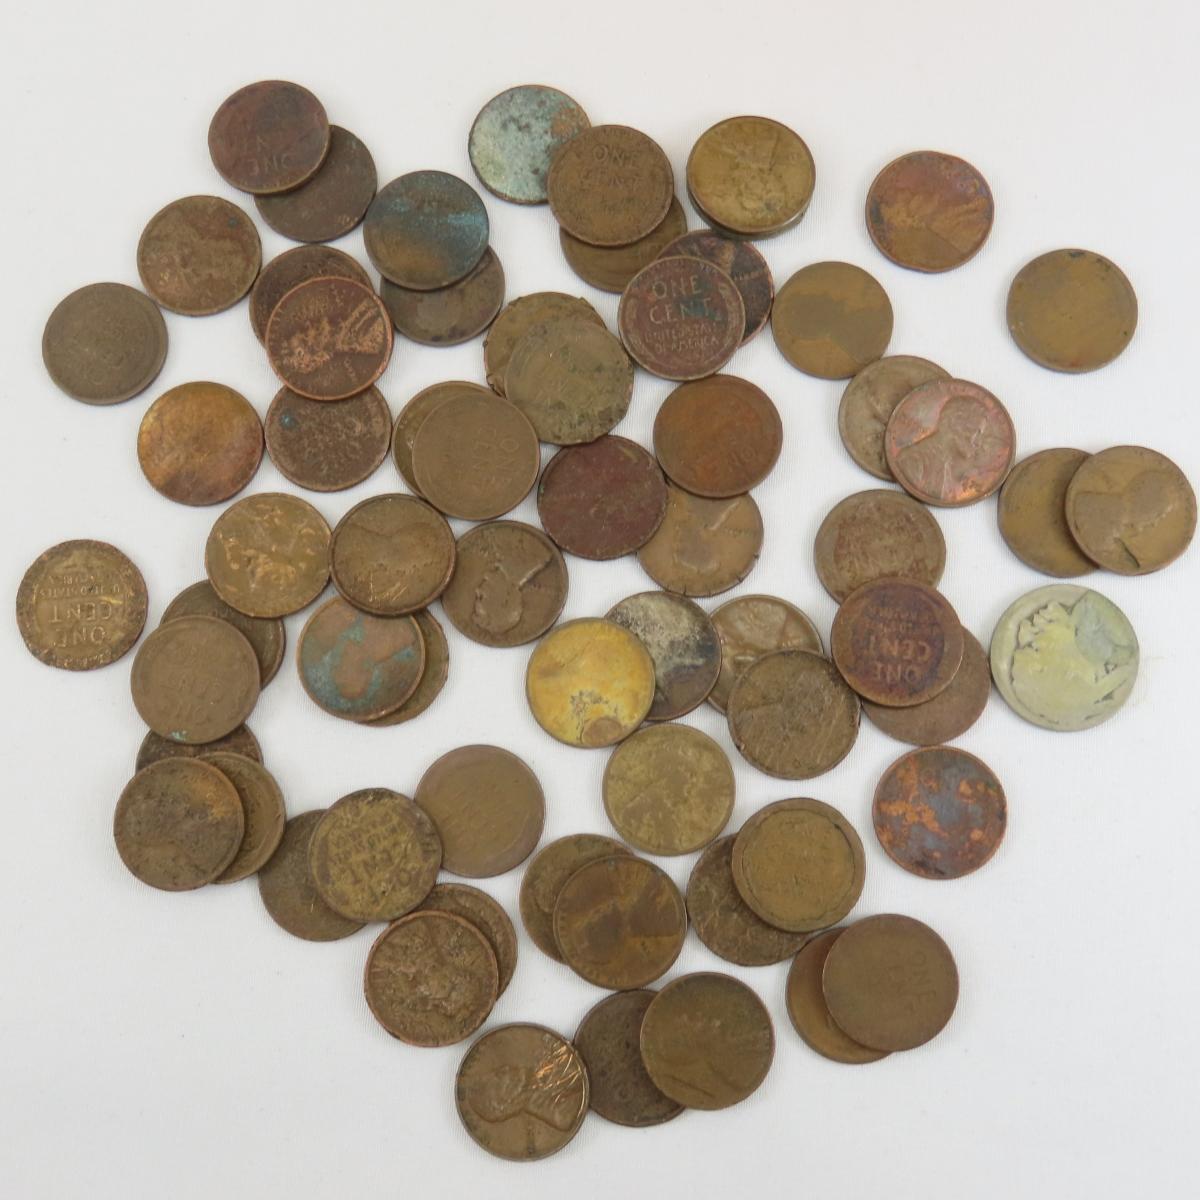 Mixed US Coins and sets